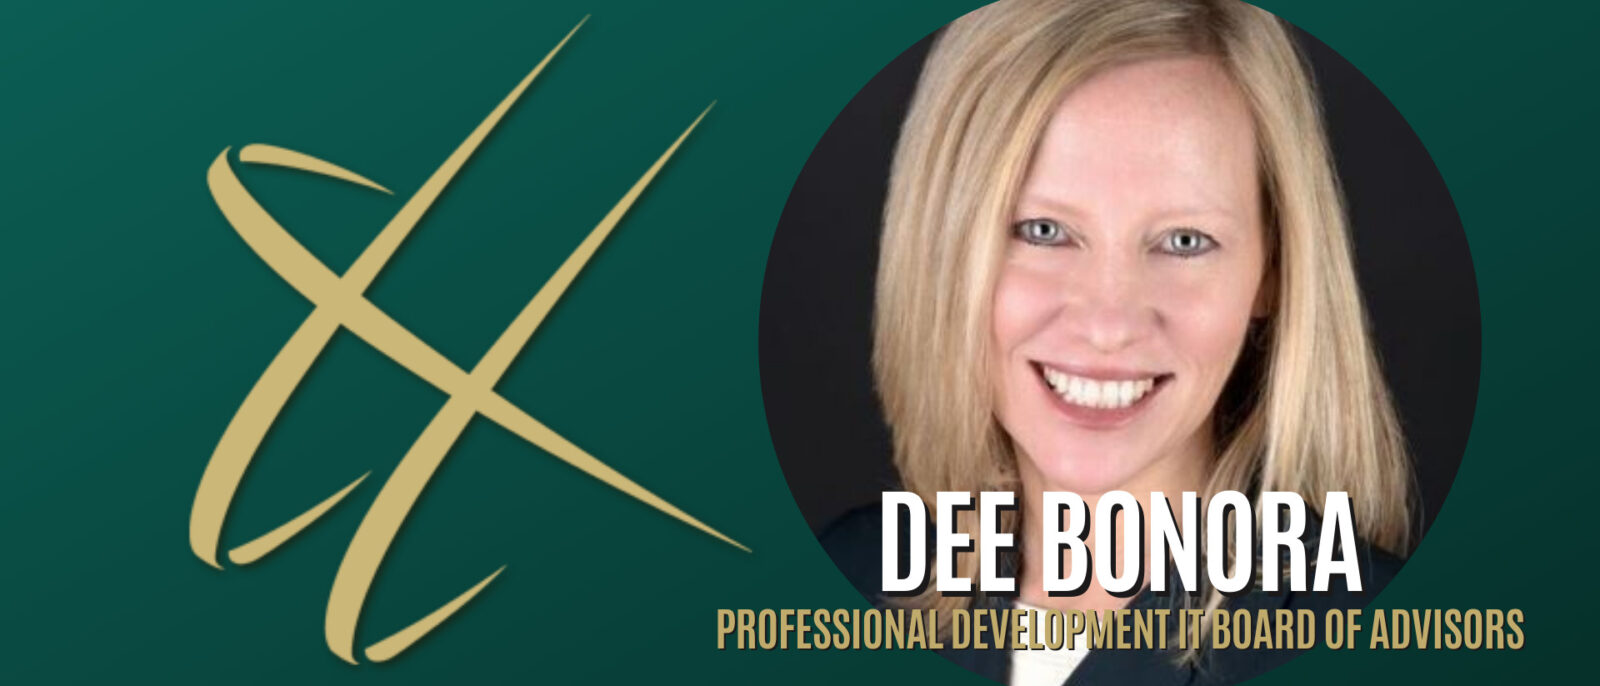 Professional Development IT Board of Advisors at Harrisburg University – Newest Member: Dee Bonora